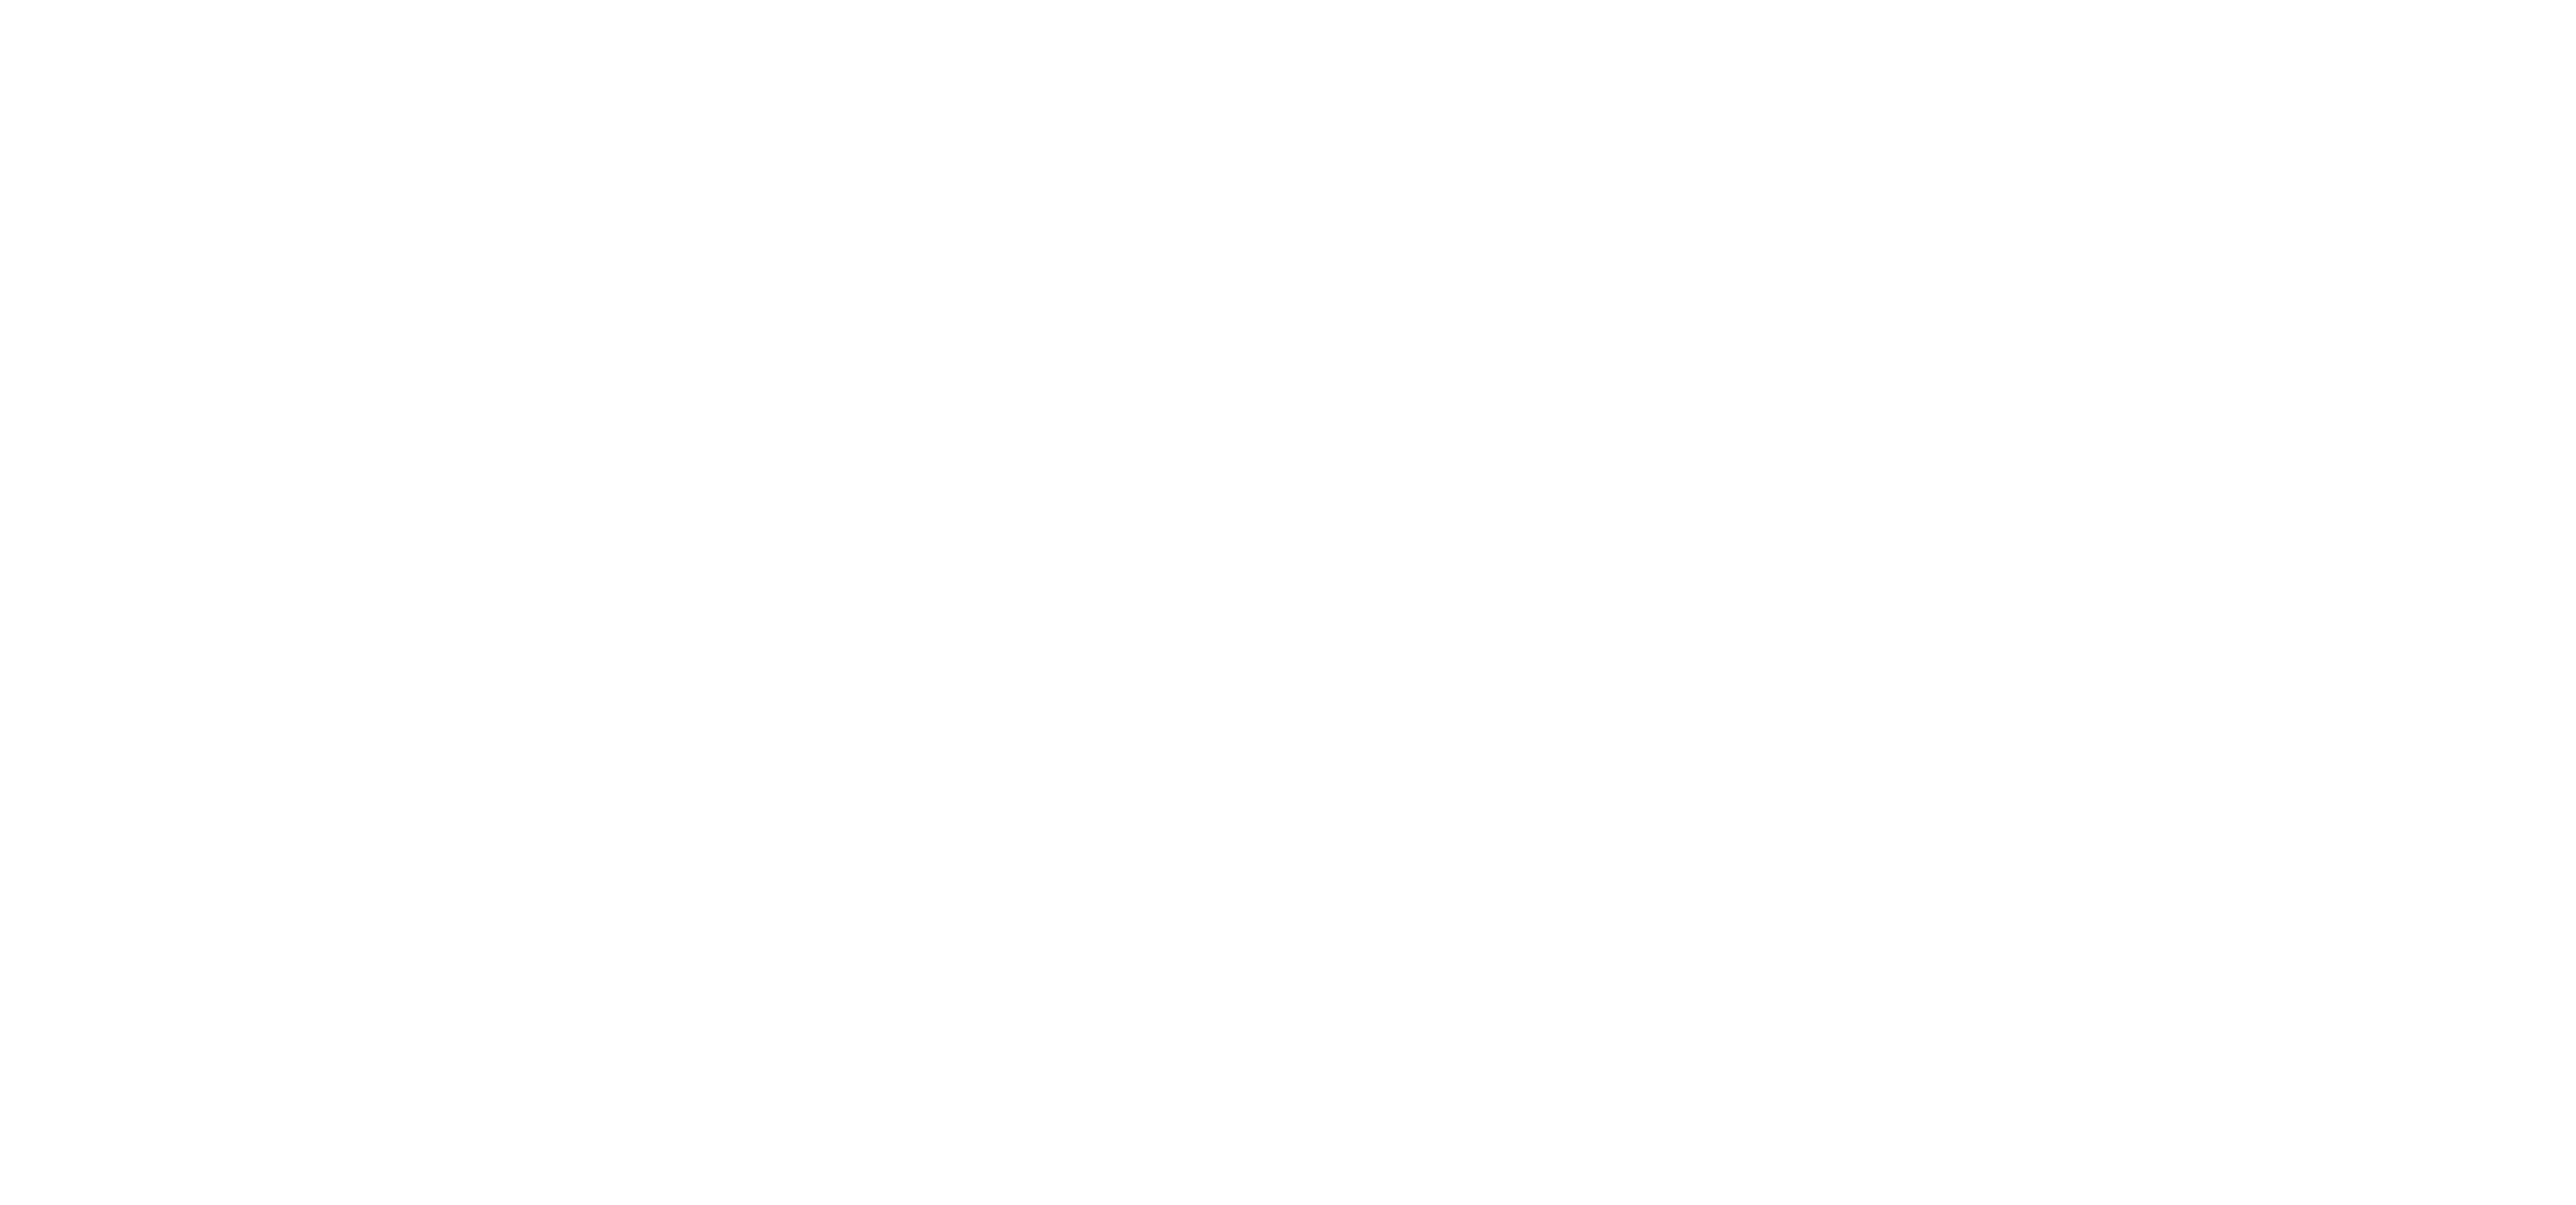 VR-KUUB